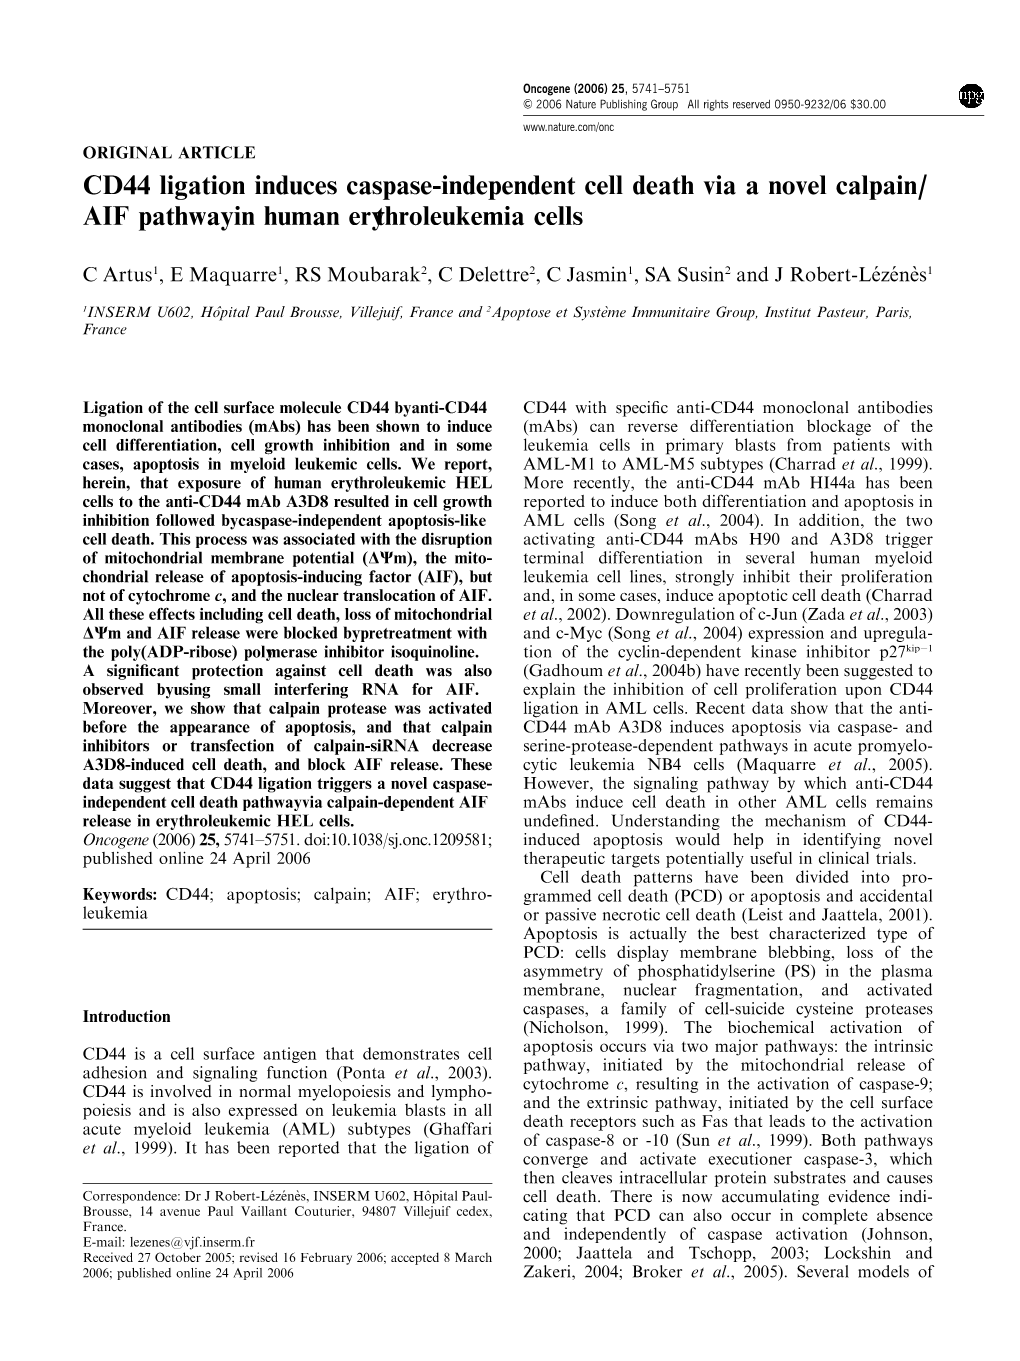 CD44 Ligation Induces Caspase-Independent Cell Death Via a Novel Calpain/ AIF Pathwayin Human Erythroleukemiacells